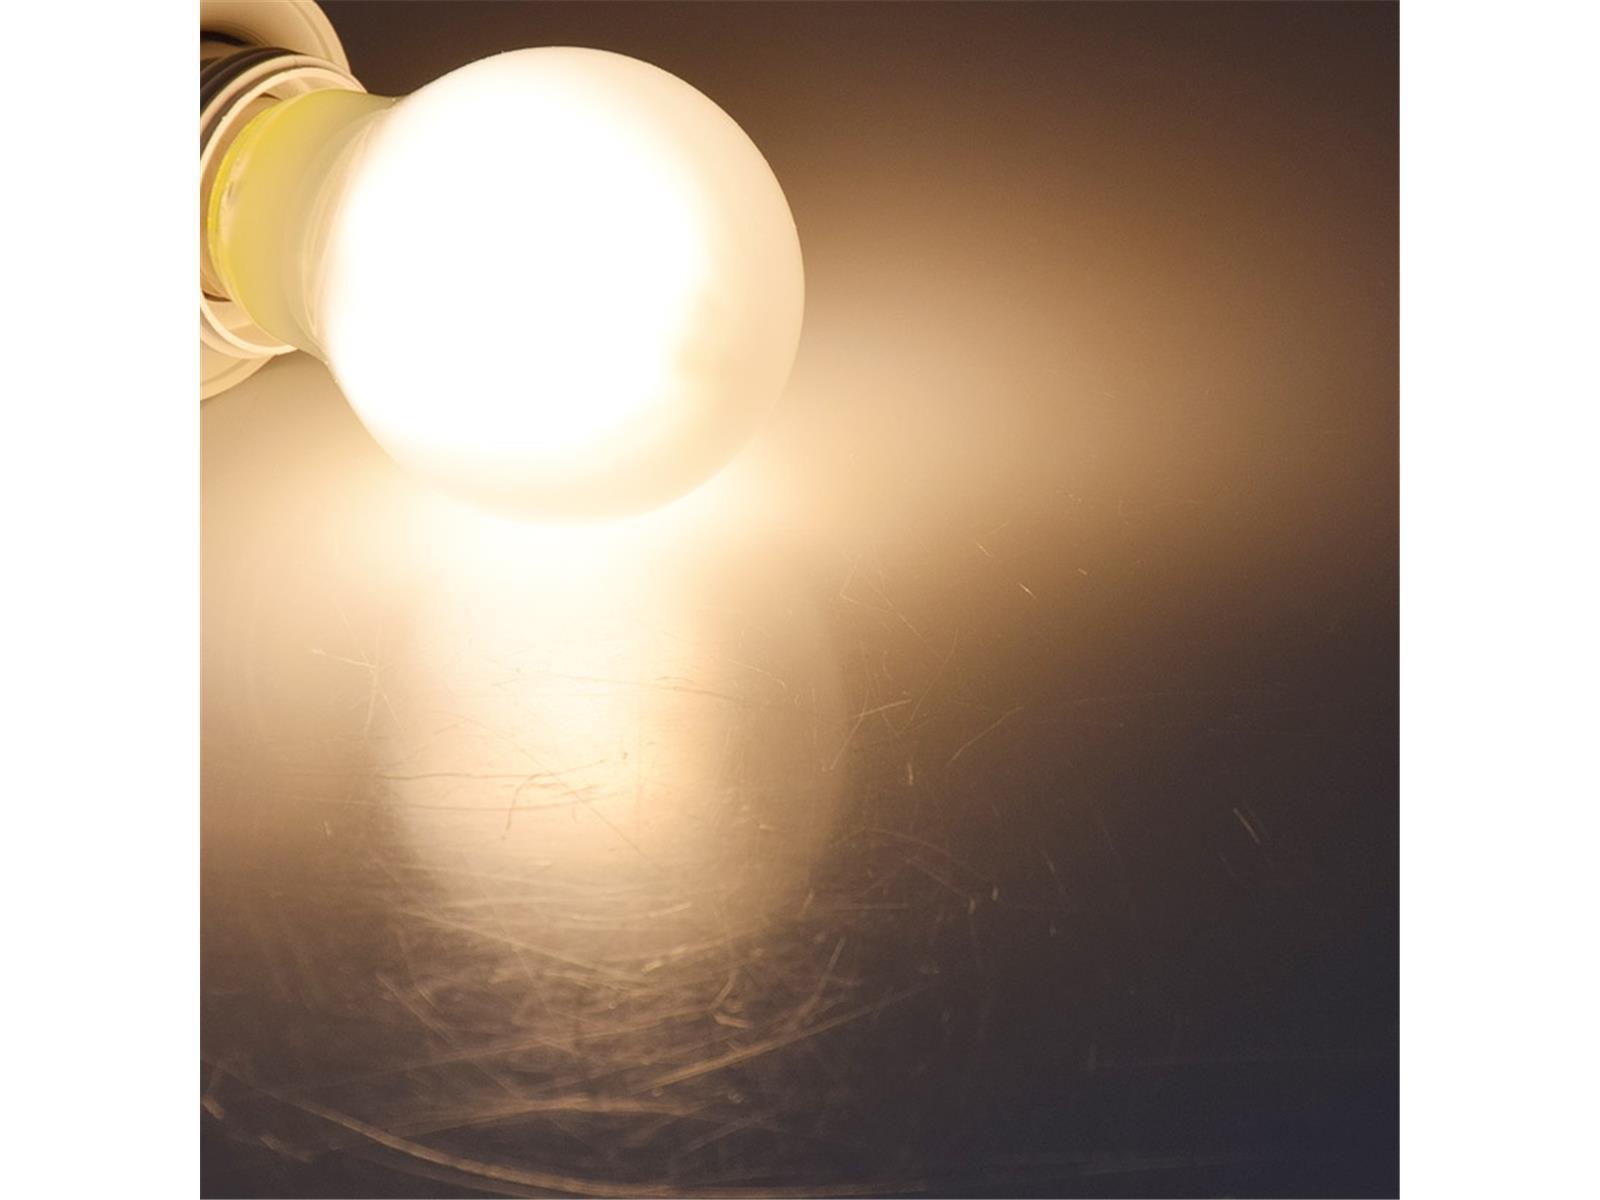 LED Glühlampe E27 "Filament G60m" matt 3000k, 640lm, 230V / 8W, warmweiß